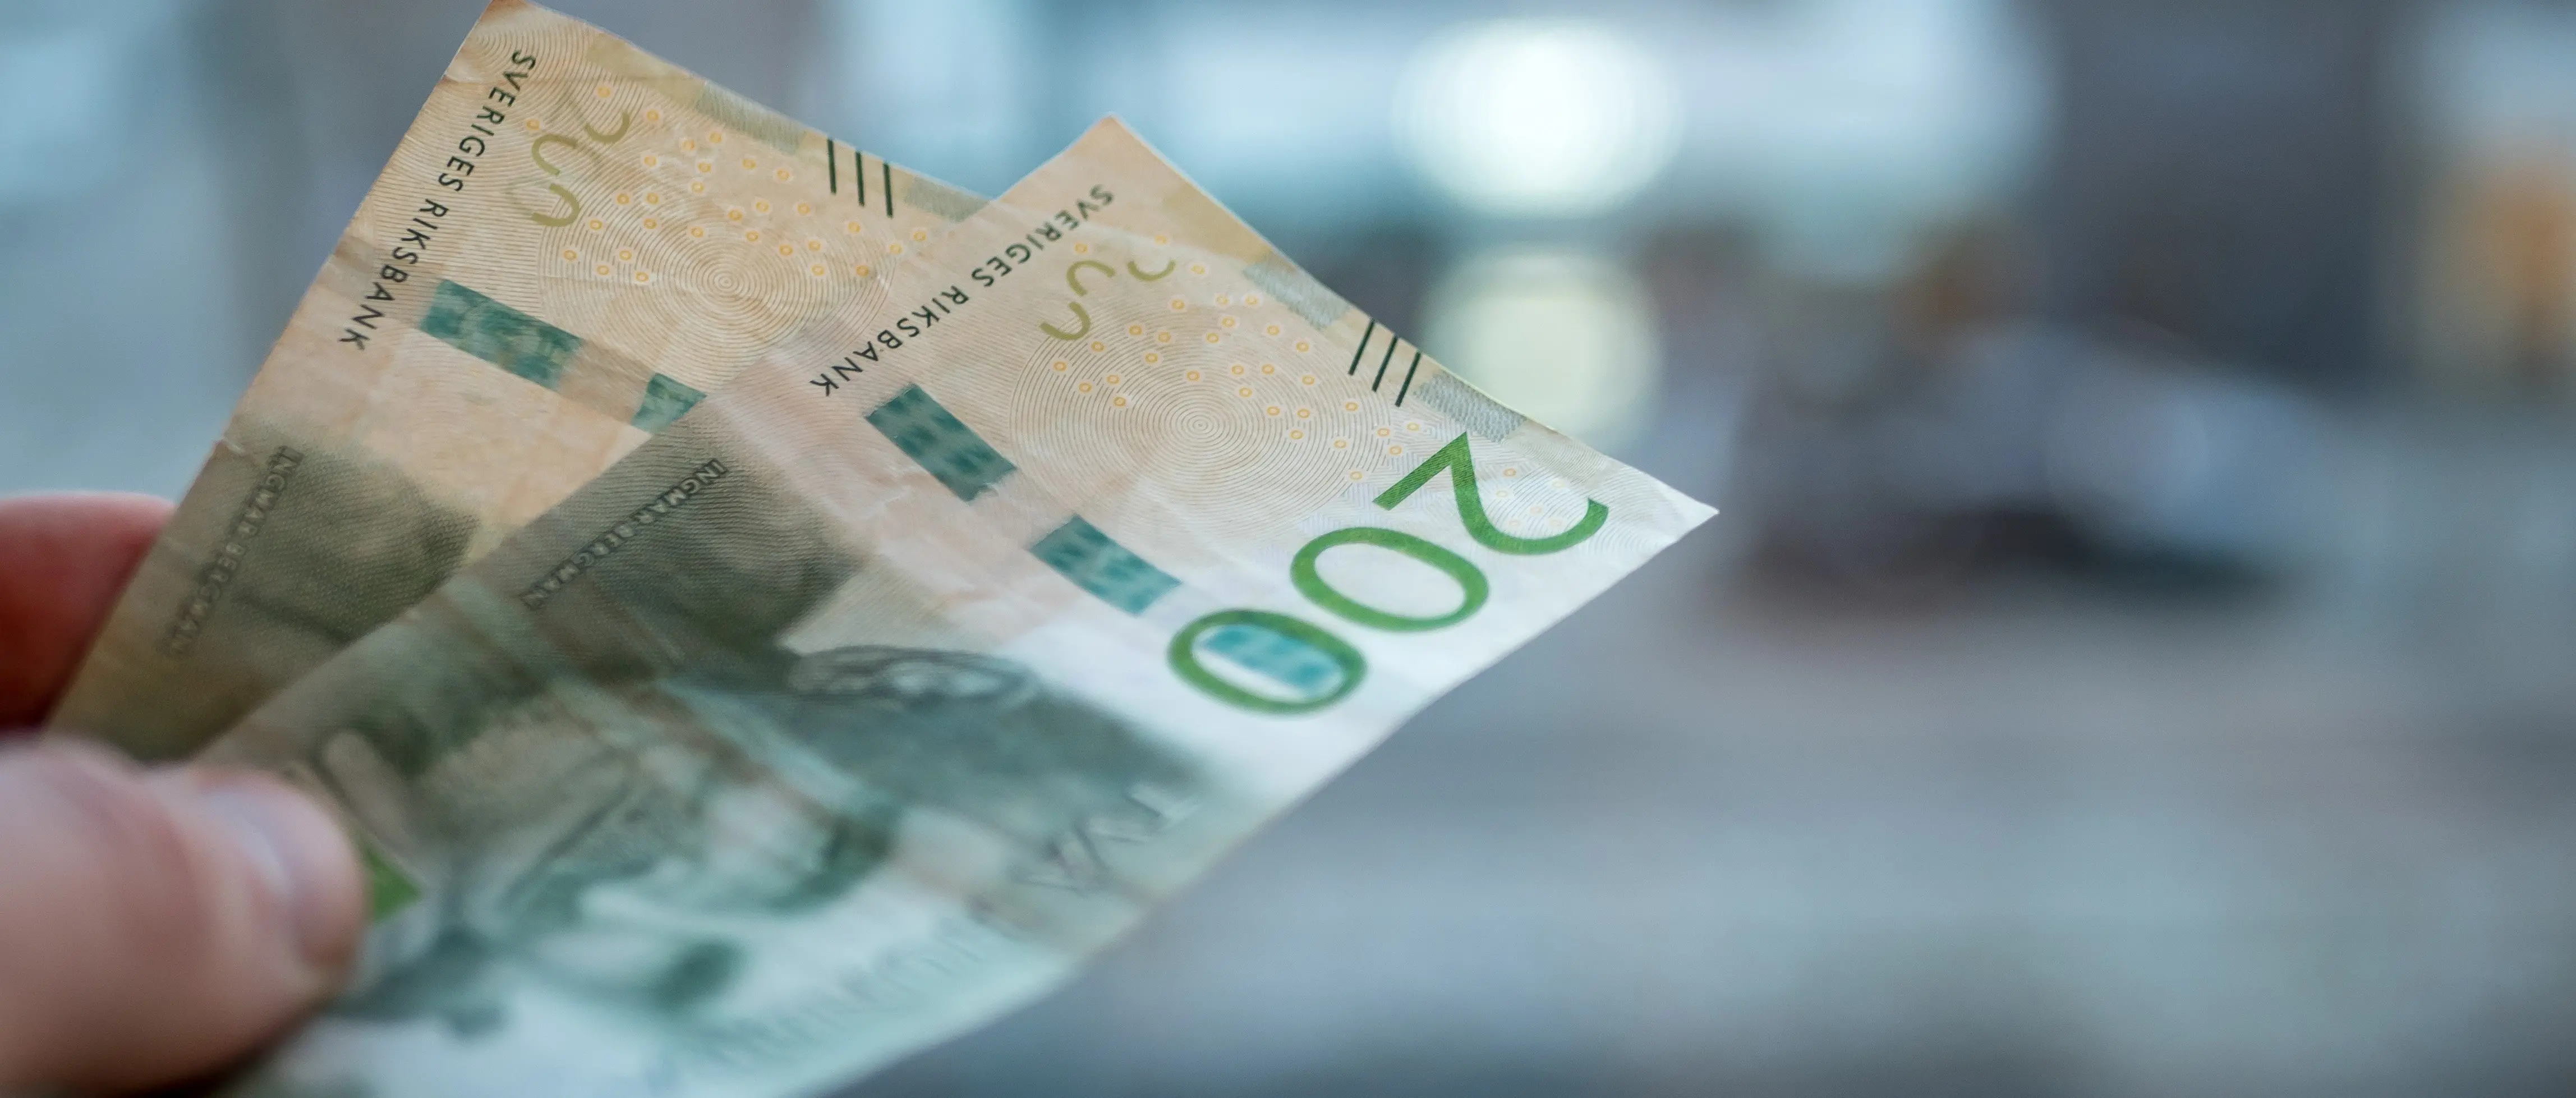 Kommuninvest issues SEK 3 billion in new bond